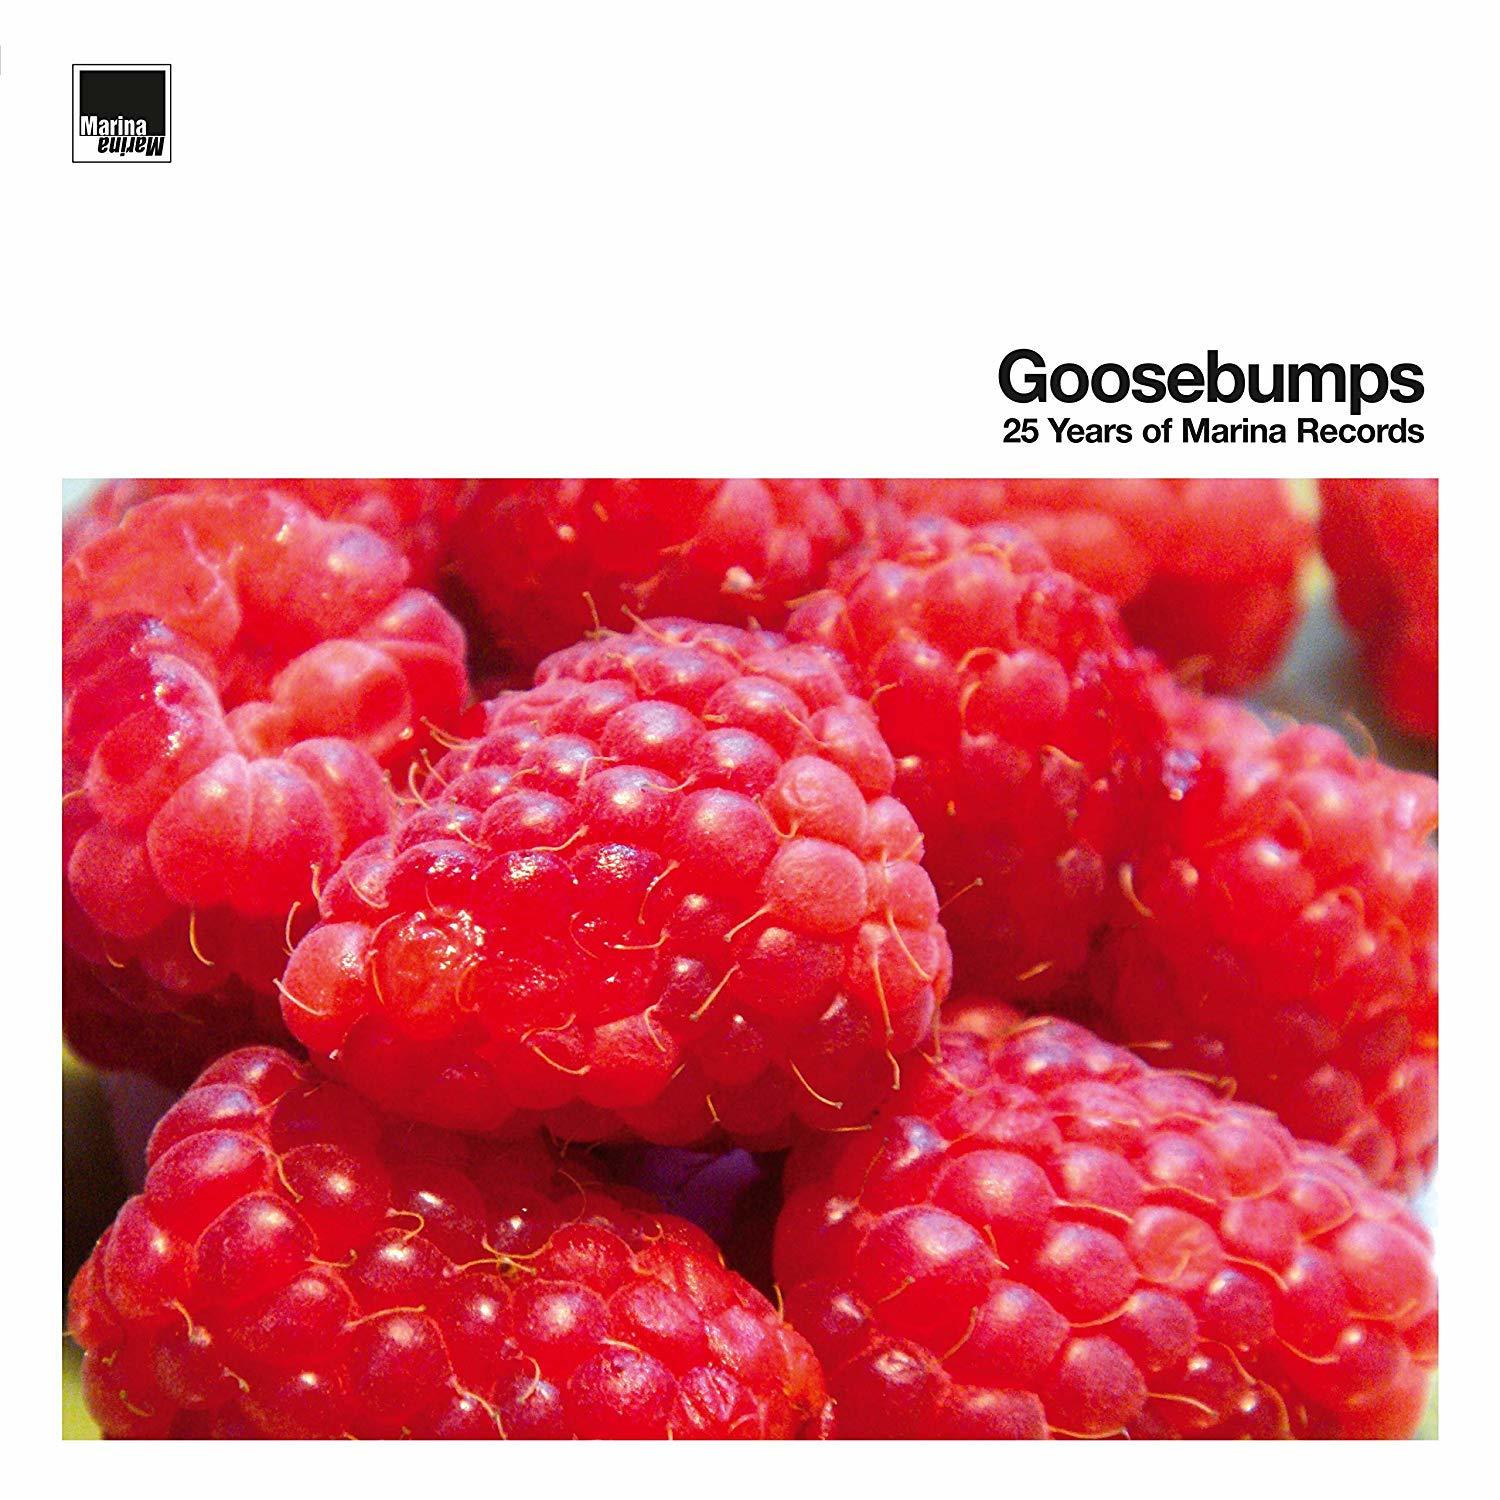 Records VARIOUS - Of (CD) Goosebumps-25 - Years Marina